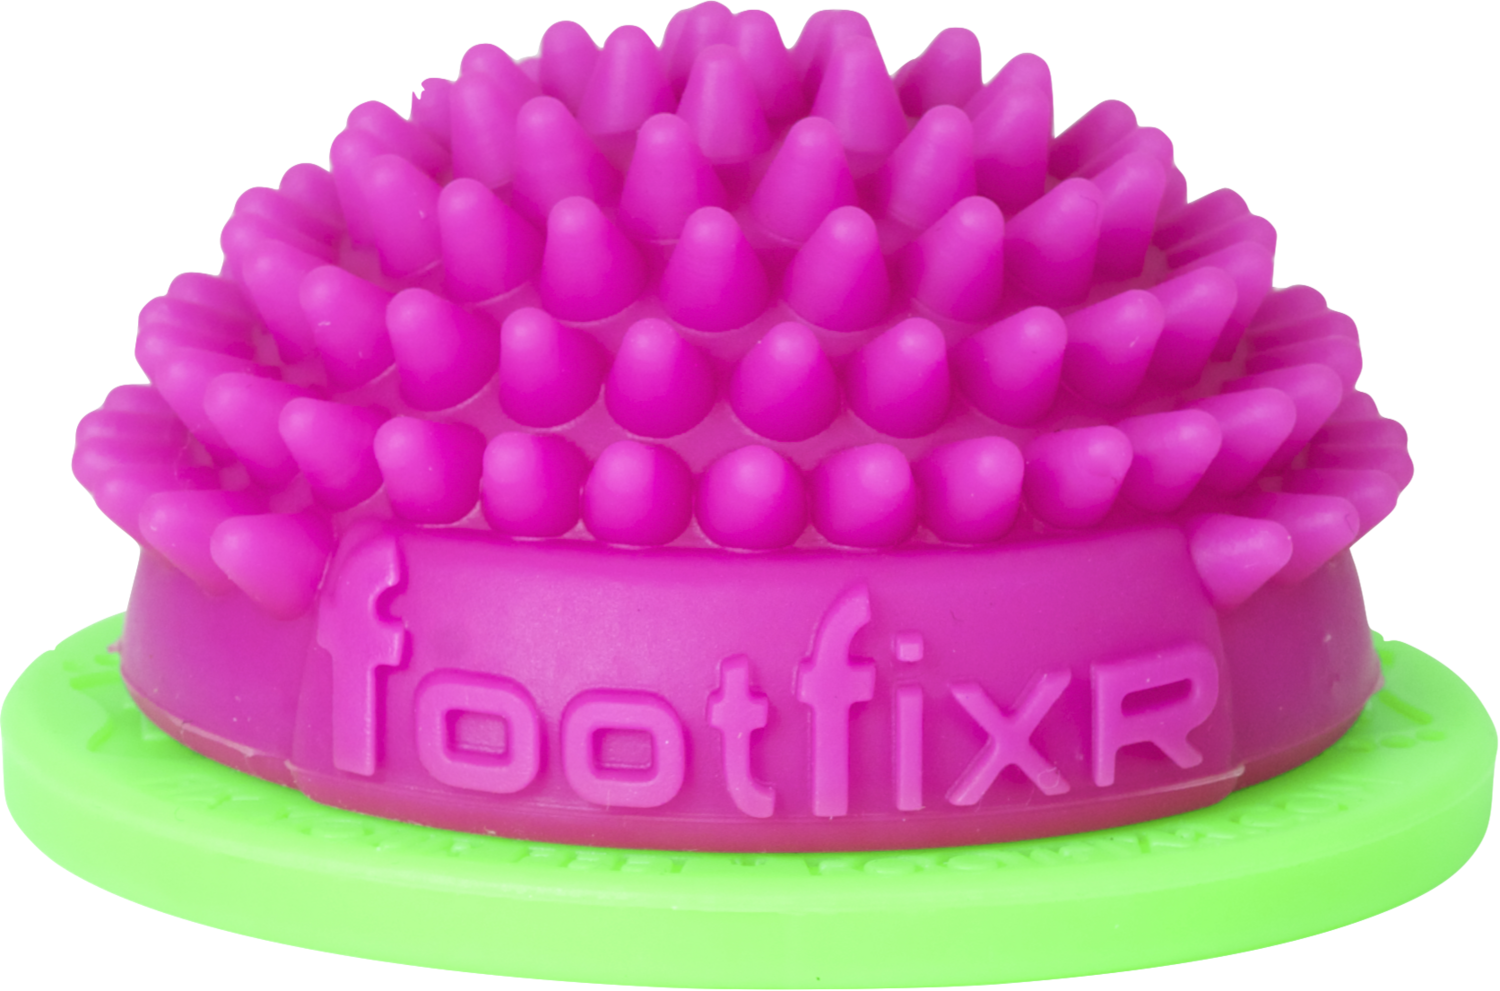 FootFIXR DIMPLE - 2 Options